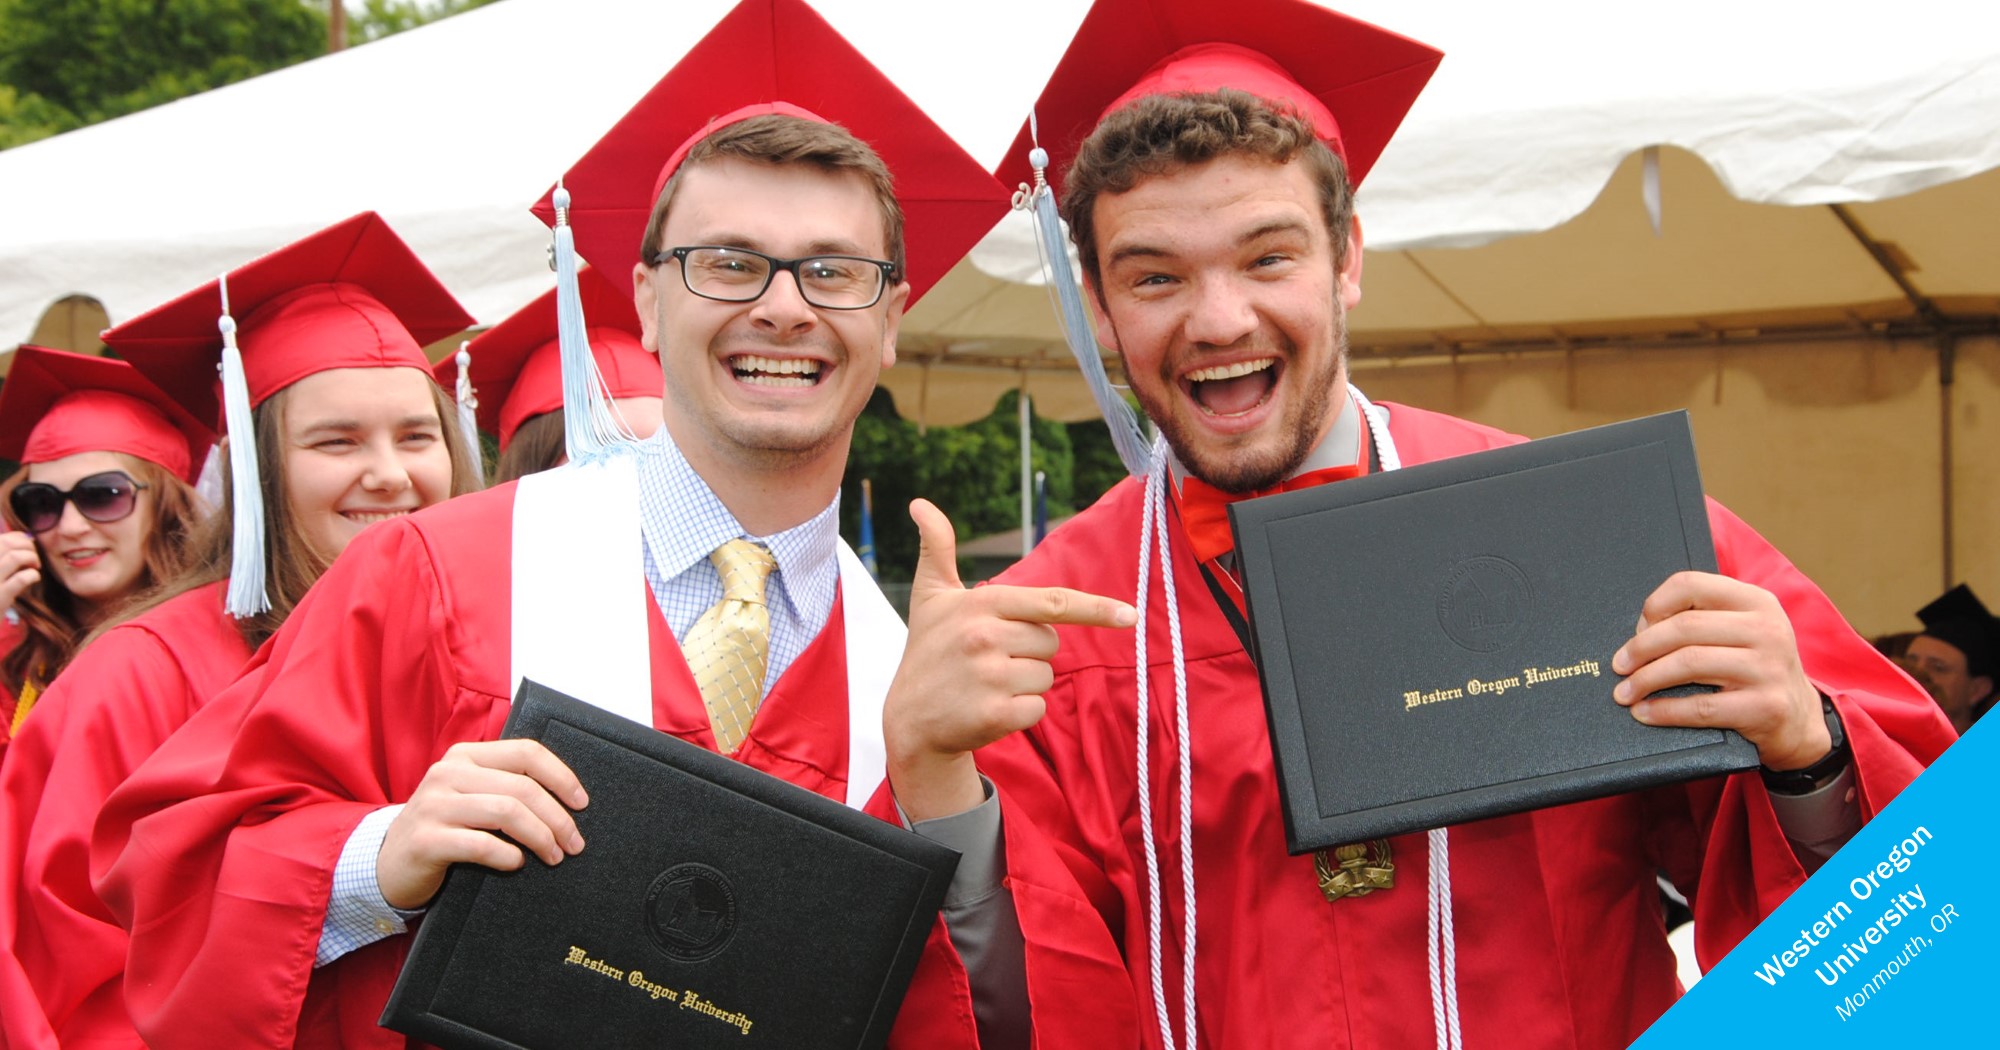 Western Oregon University graduates smiling and pointing to diplomas